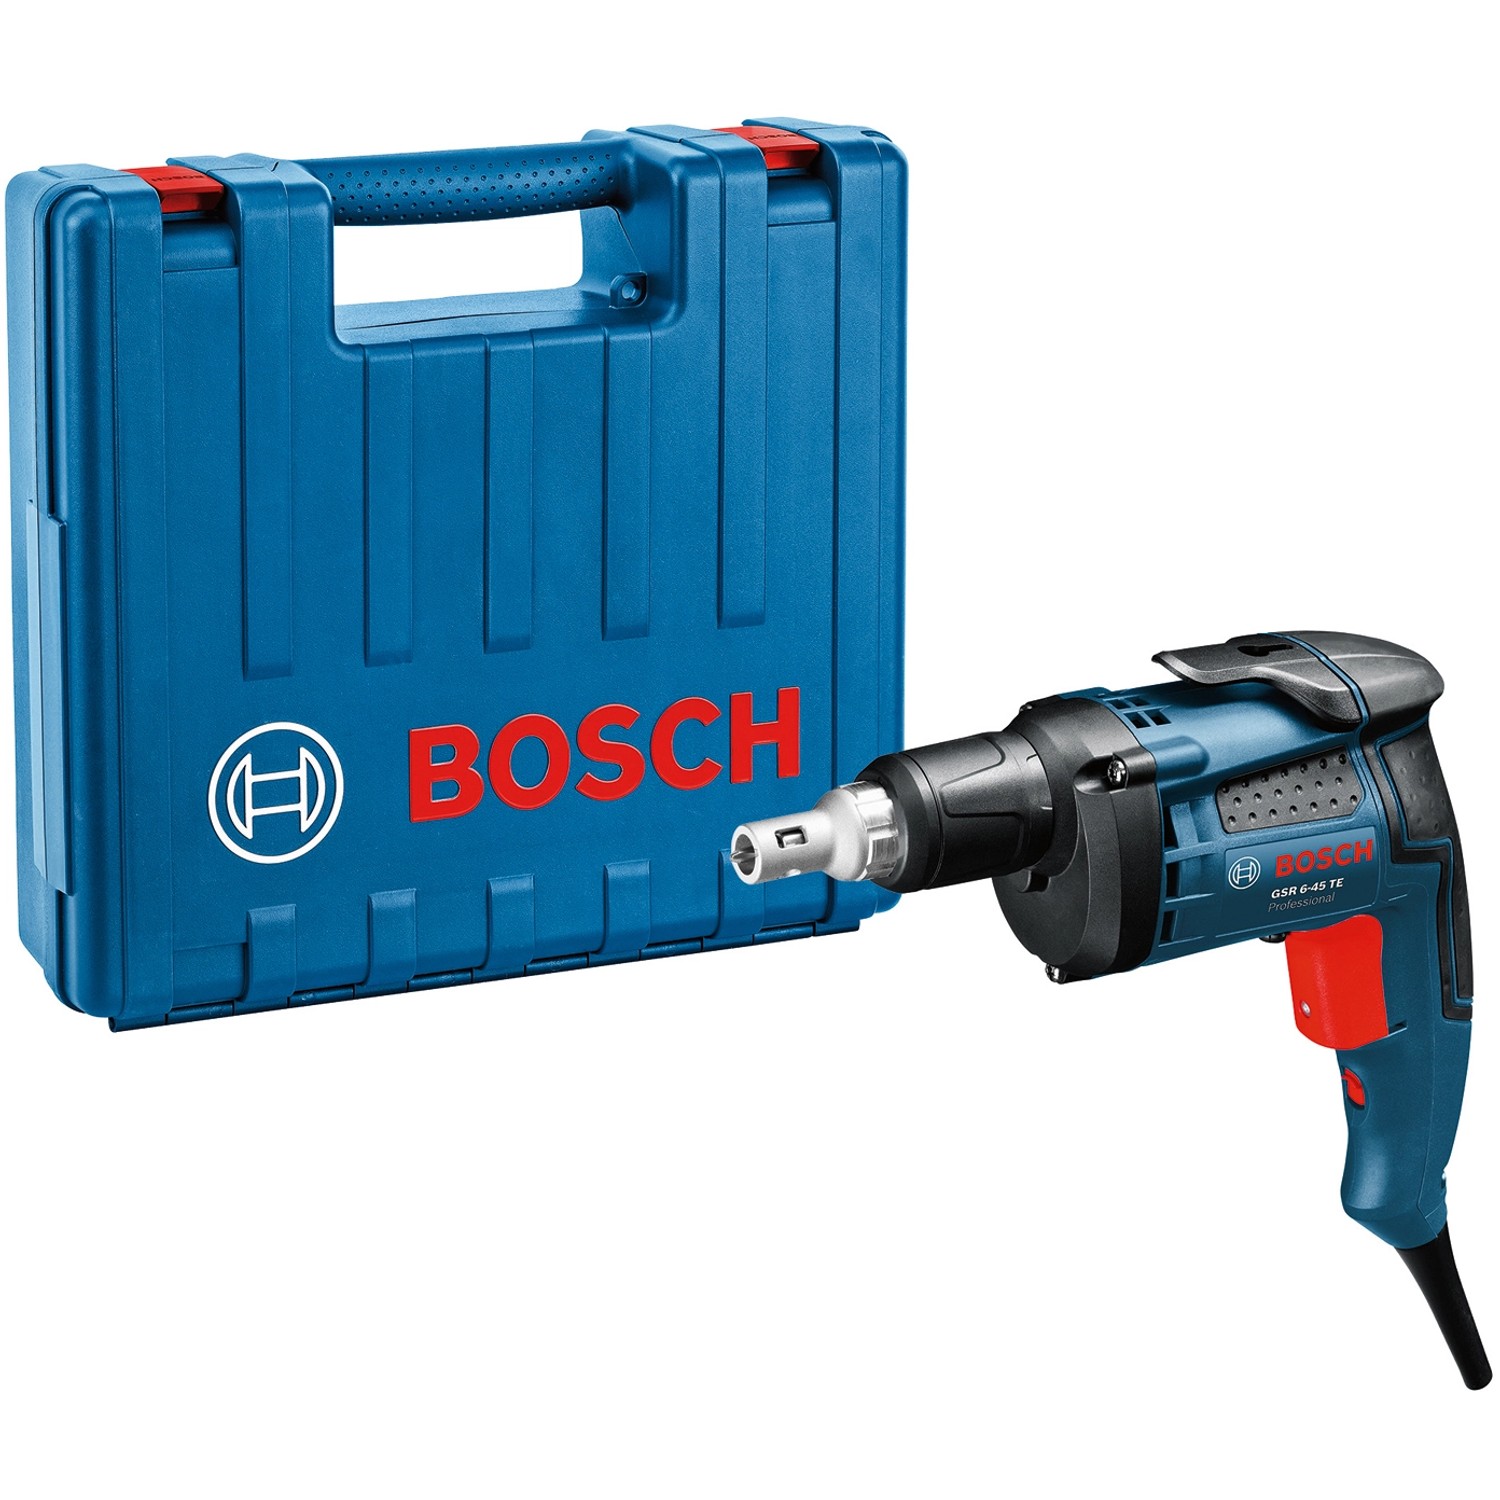 Bosch Professional Trockenbauschrauber GSR 6-45 TE im Karton